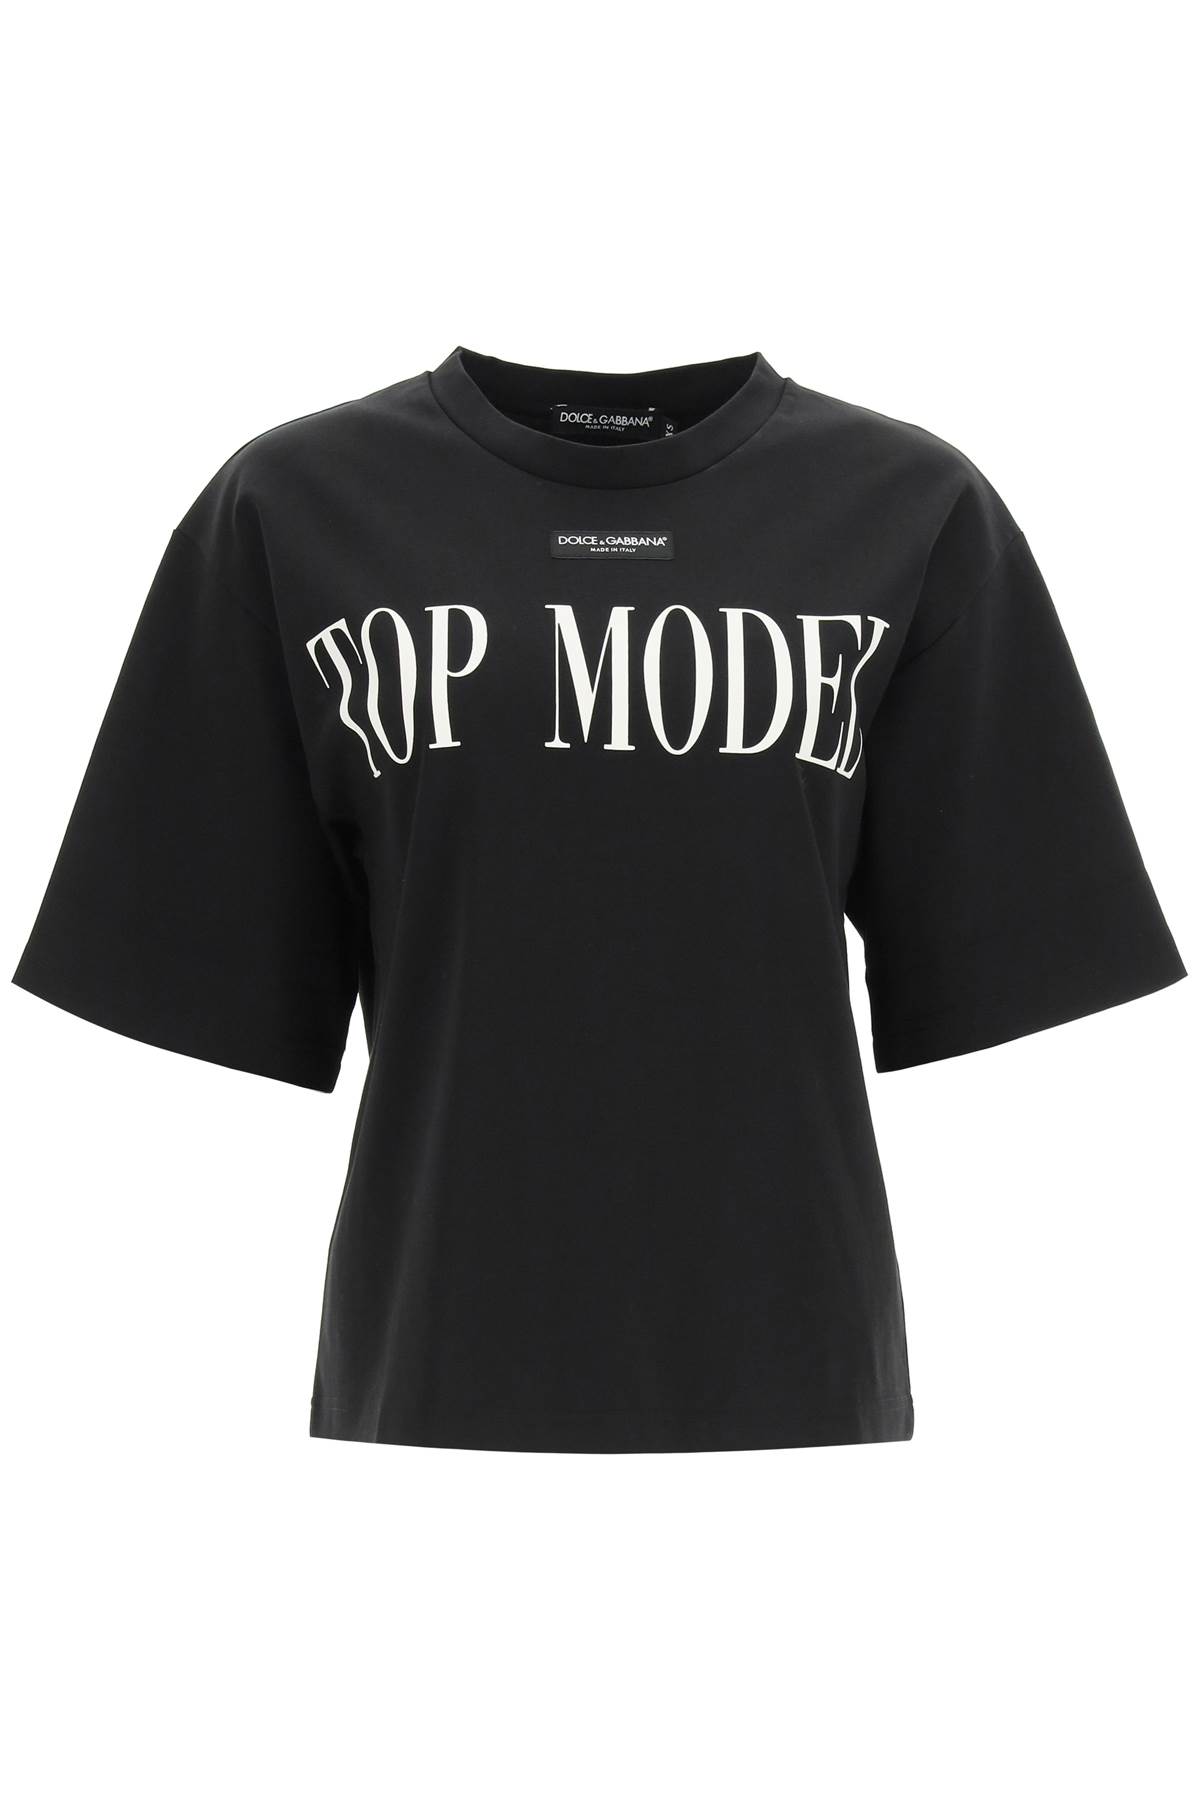 Dolce & Gabbana Top Model Graphic T-shirt